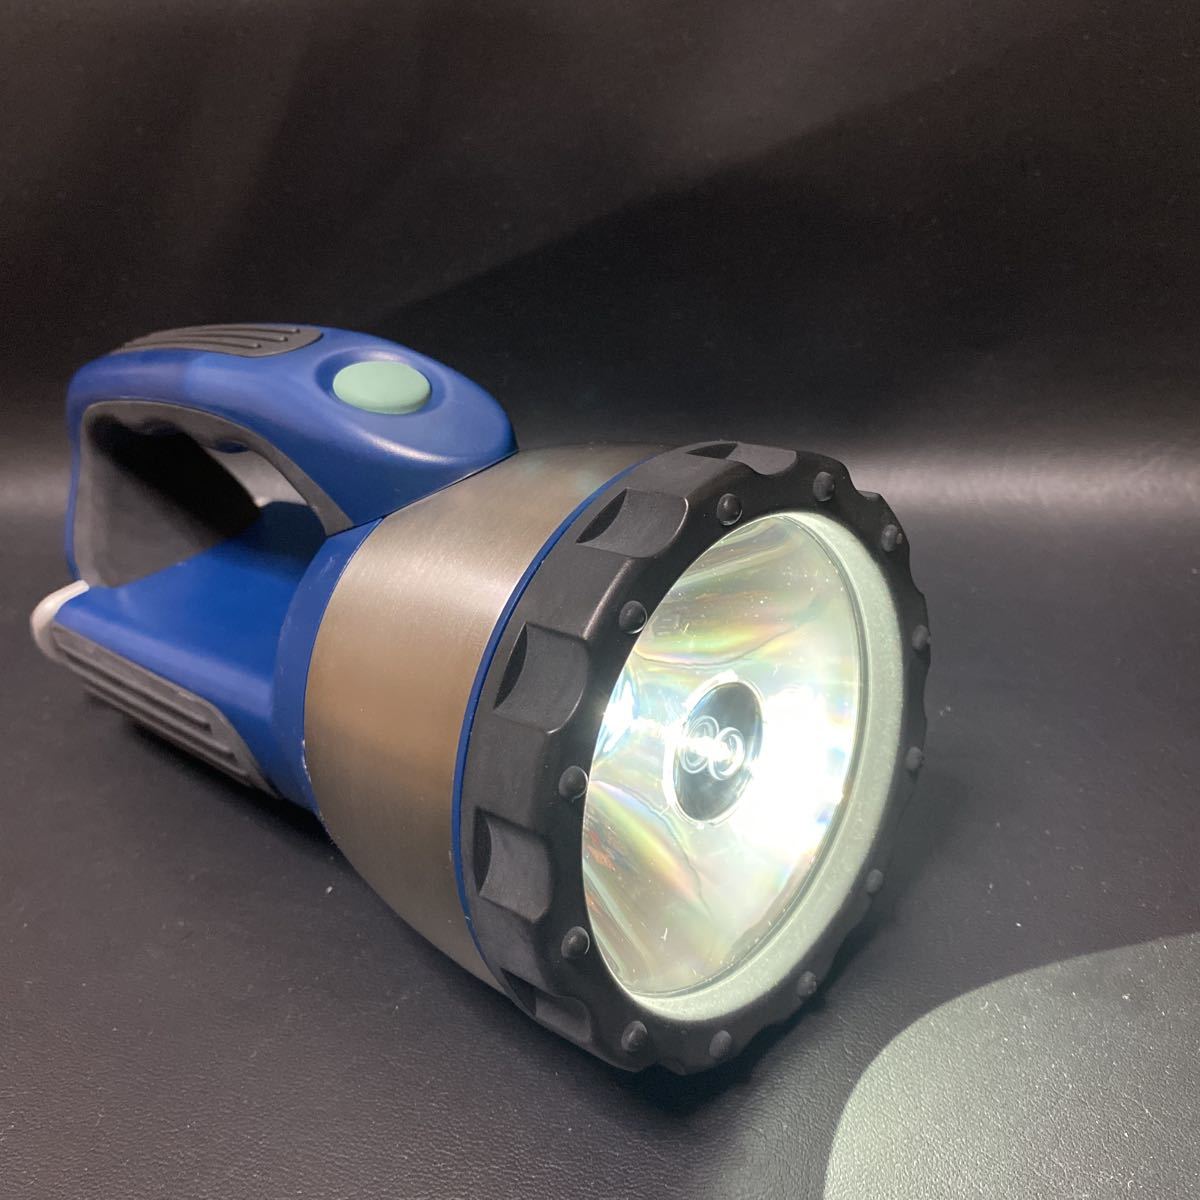 FUJITSU 富士通スーパー LEDライト　懐中電灯　強力ライト　光輝度スーパーLED光源と大口径レンズ強力照射　災害　非常用　